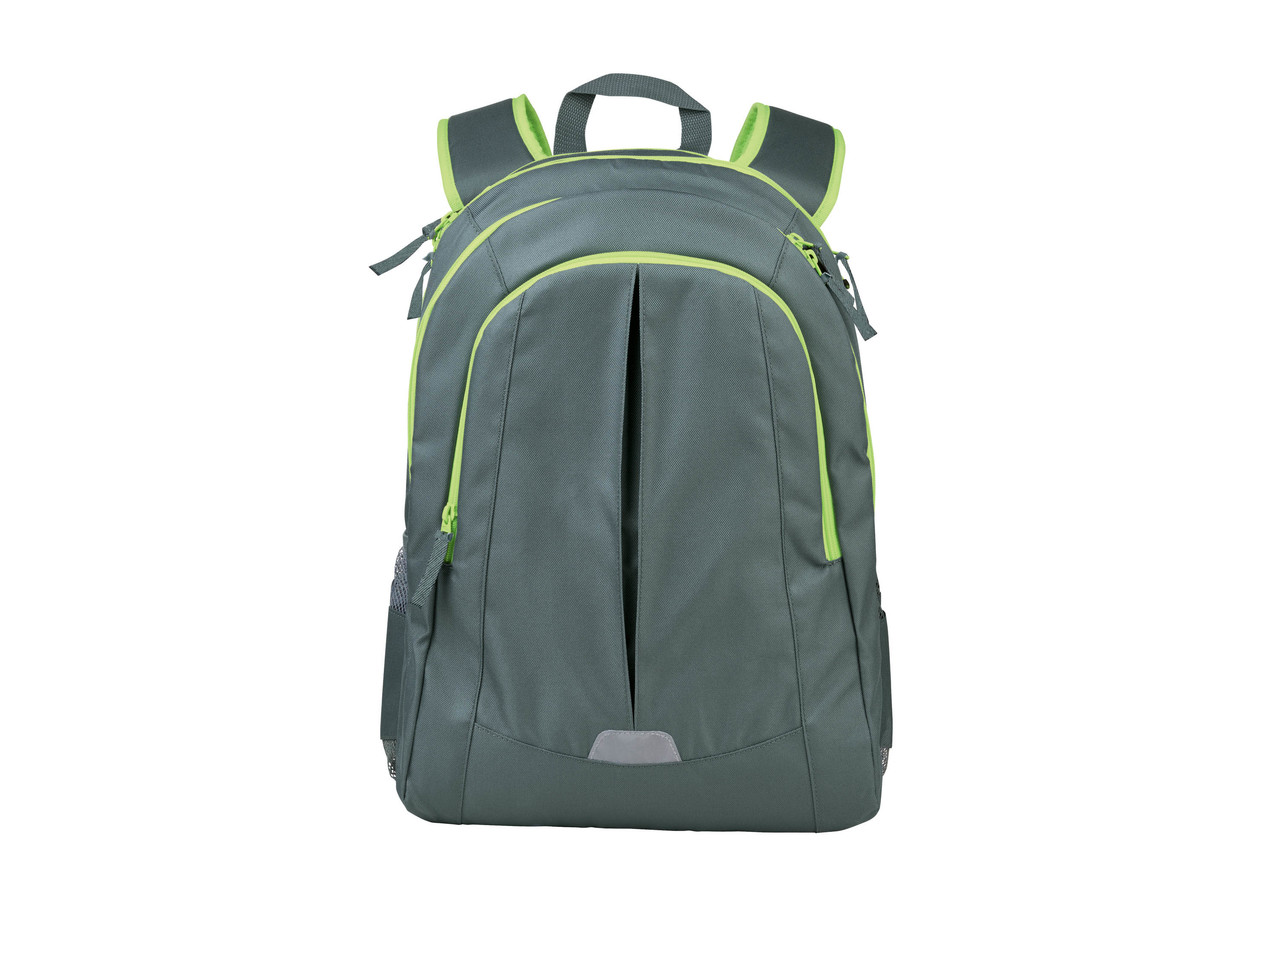 TOPMOVE 27L School Backpack